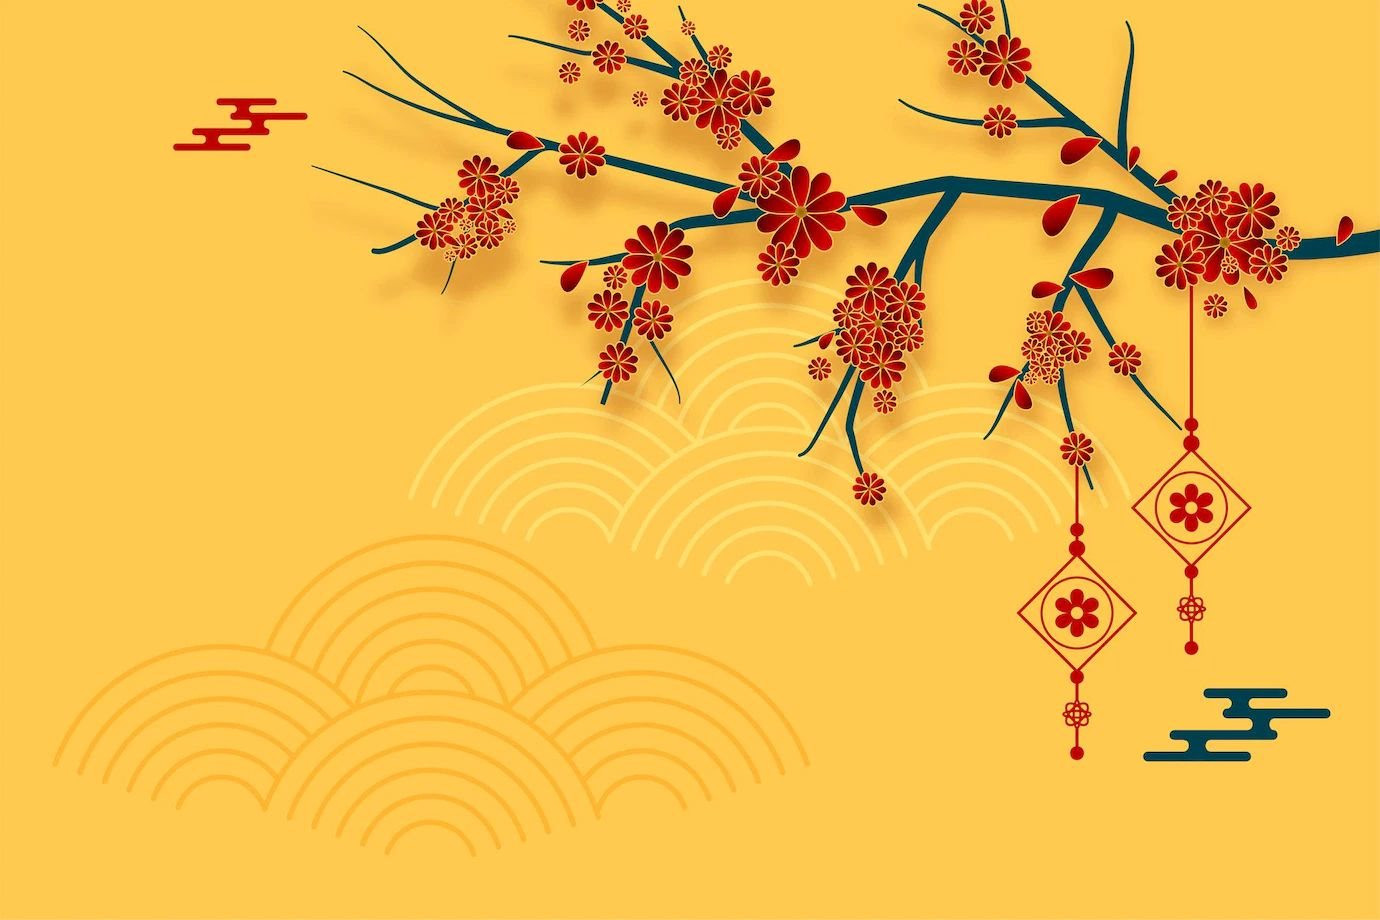 traditional-chinese-background-with-sakura-tree-lantern-decoration_1017-35765-compressed.jpg